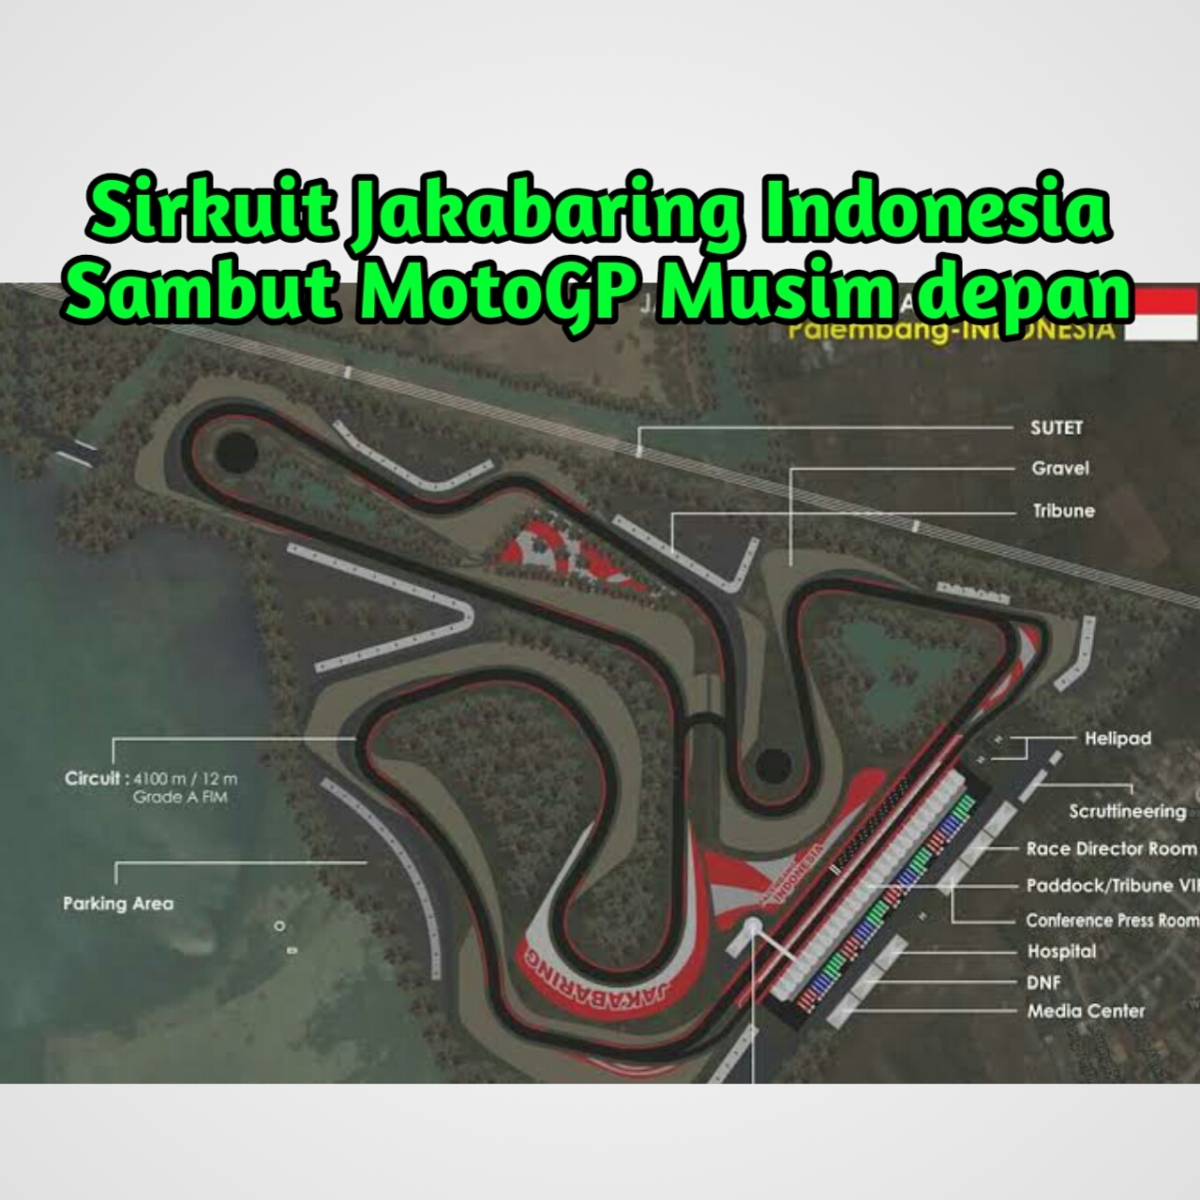 Sirkuit Jakabaring Palembang Indonesia Siap Sambut MotoGP Tahun Ini